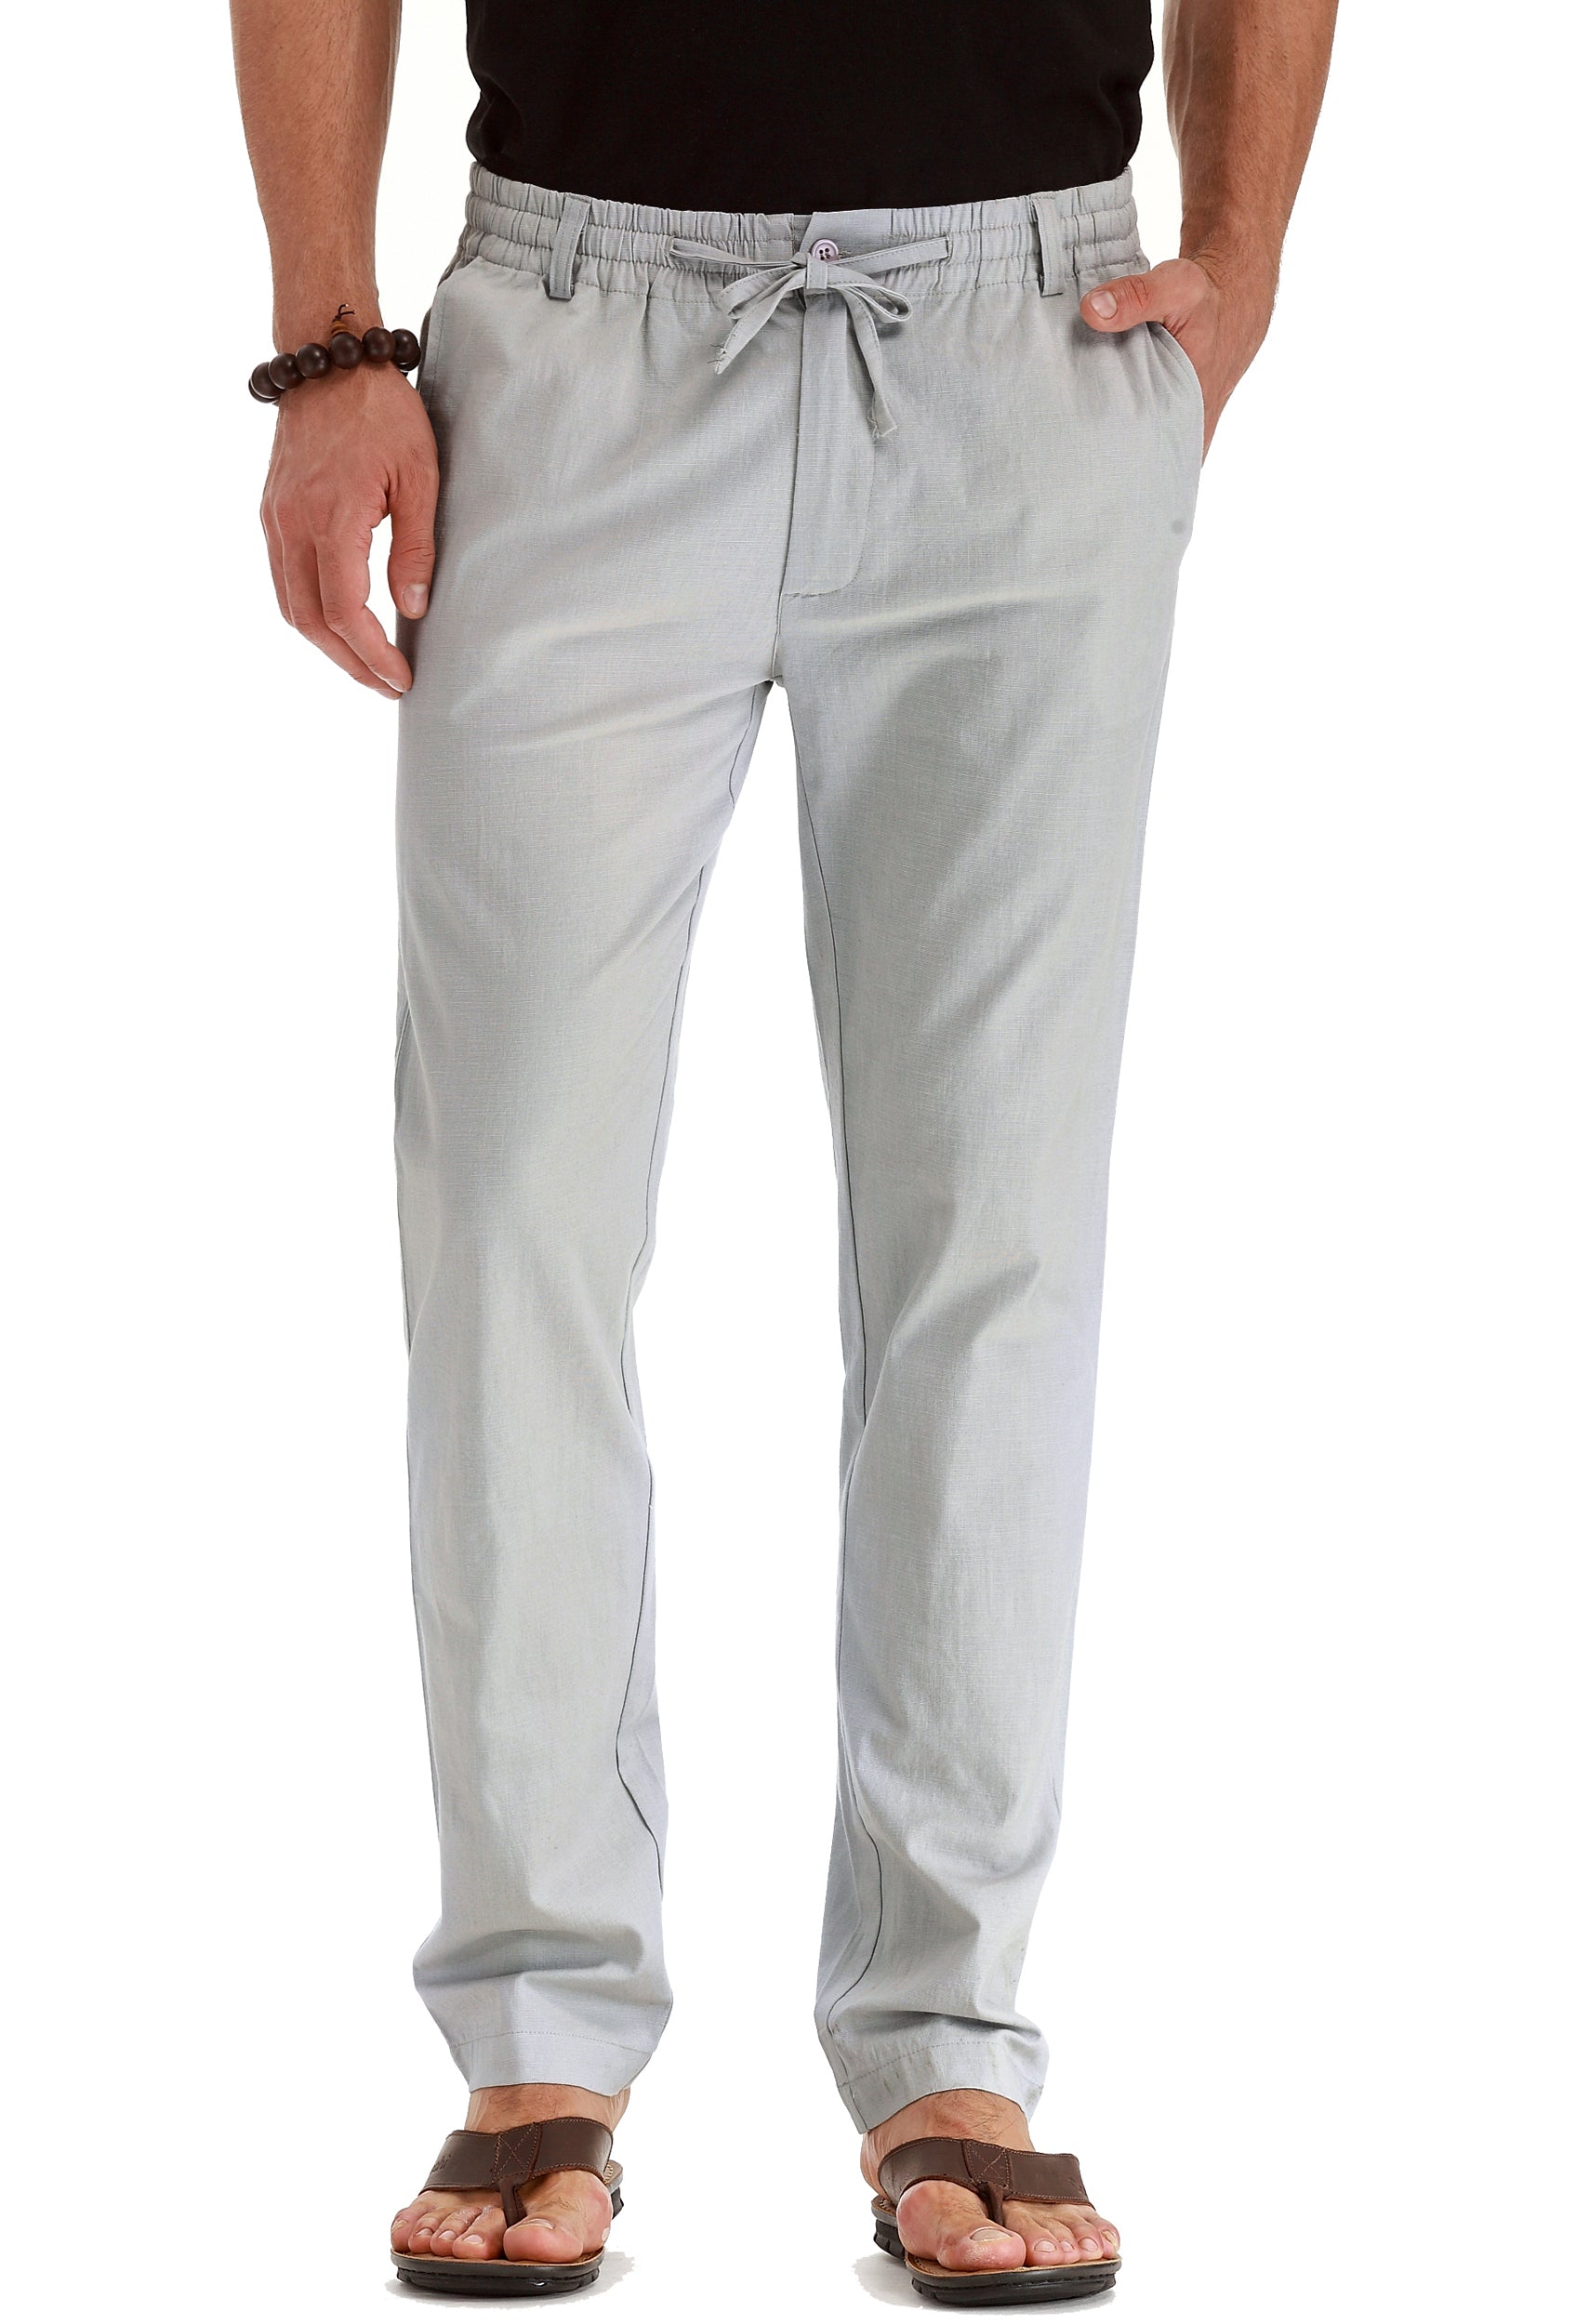 adviicd Men Pants For Hot Weather Plus Size Cargo Pants Men's Linen Cotton  Loose Fit Casual Lightweight Elastic Waist Summer Beach Pants White S -  Walmart.com